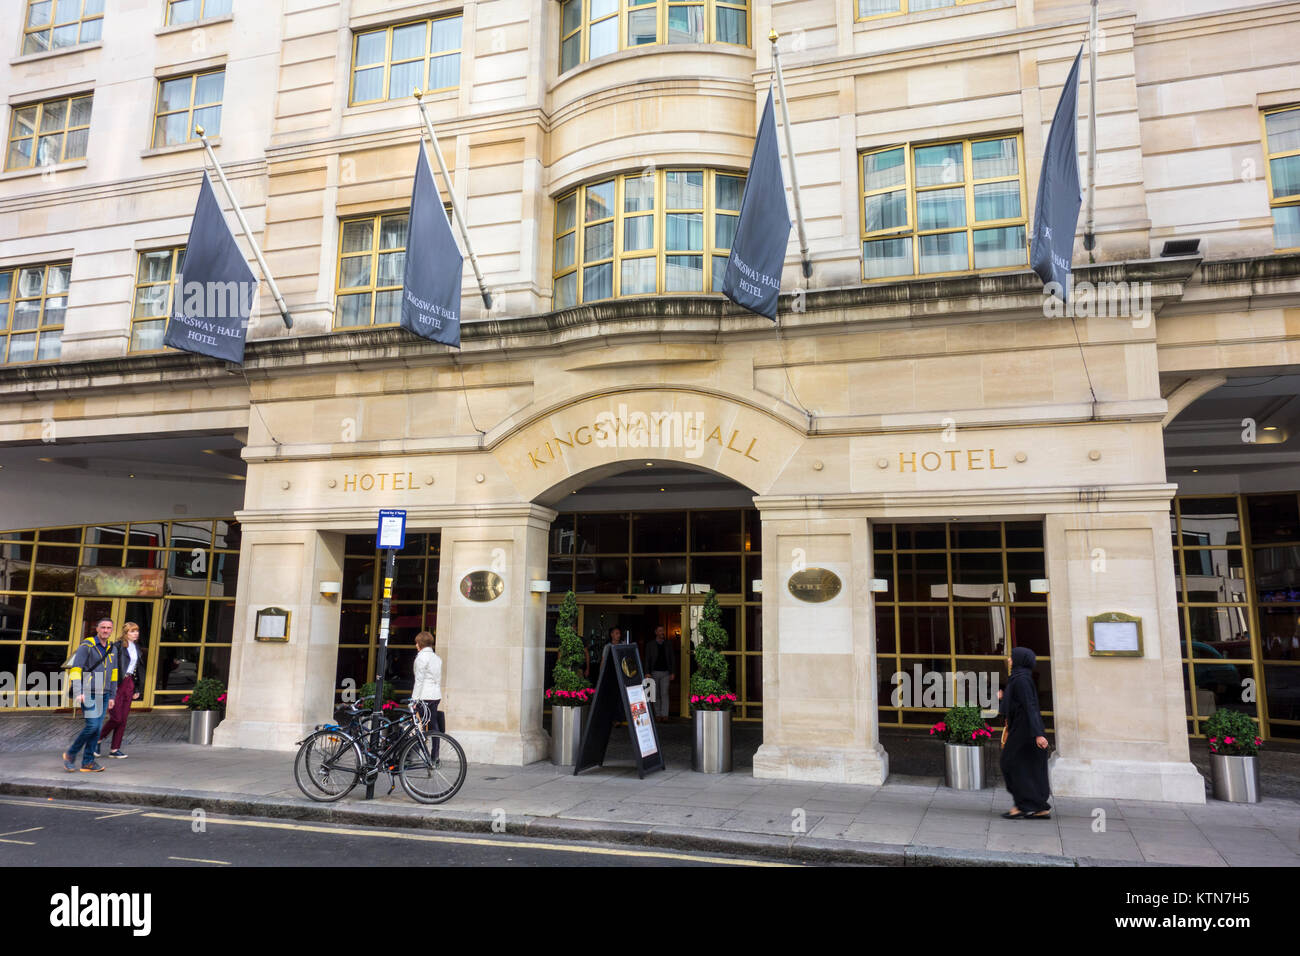 Kingsway Hall Hotel, Great Queen Street, Bloomsbury, London, UK Banque D'Images